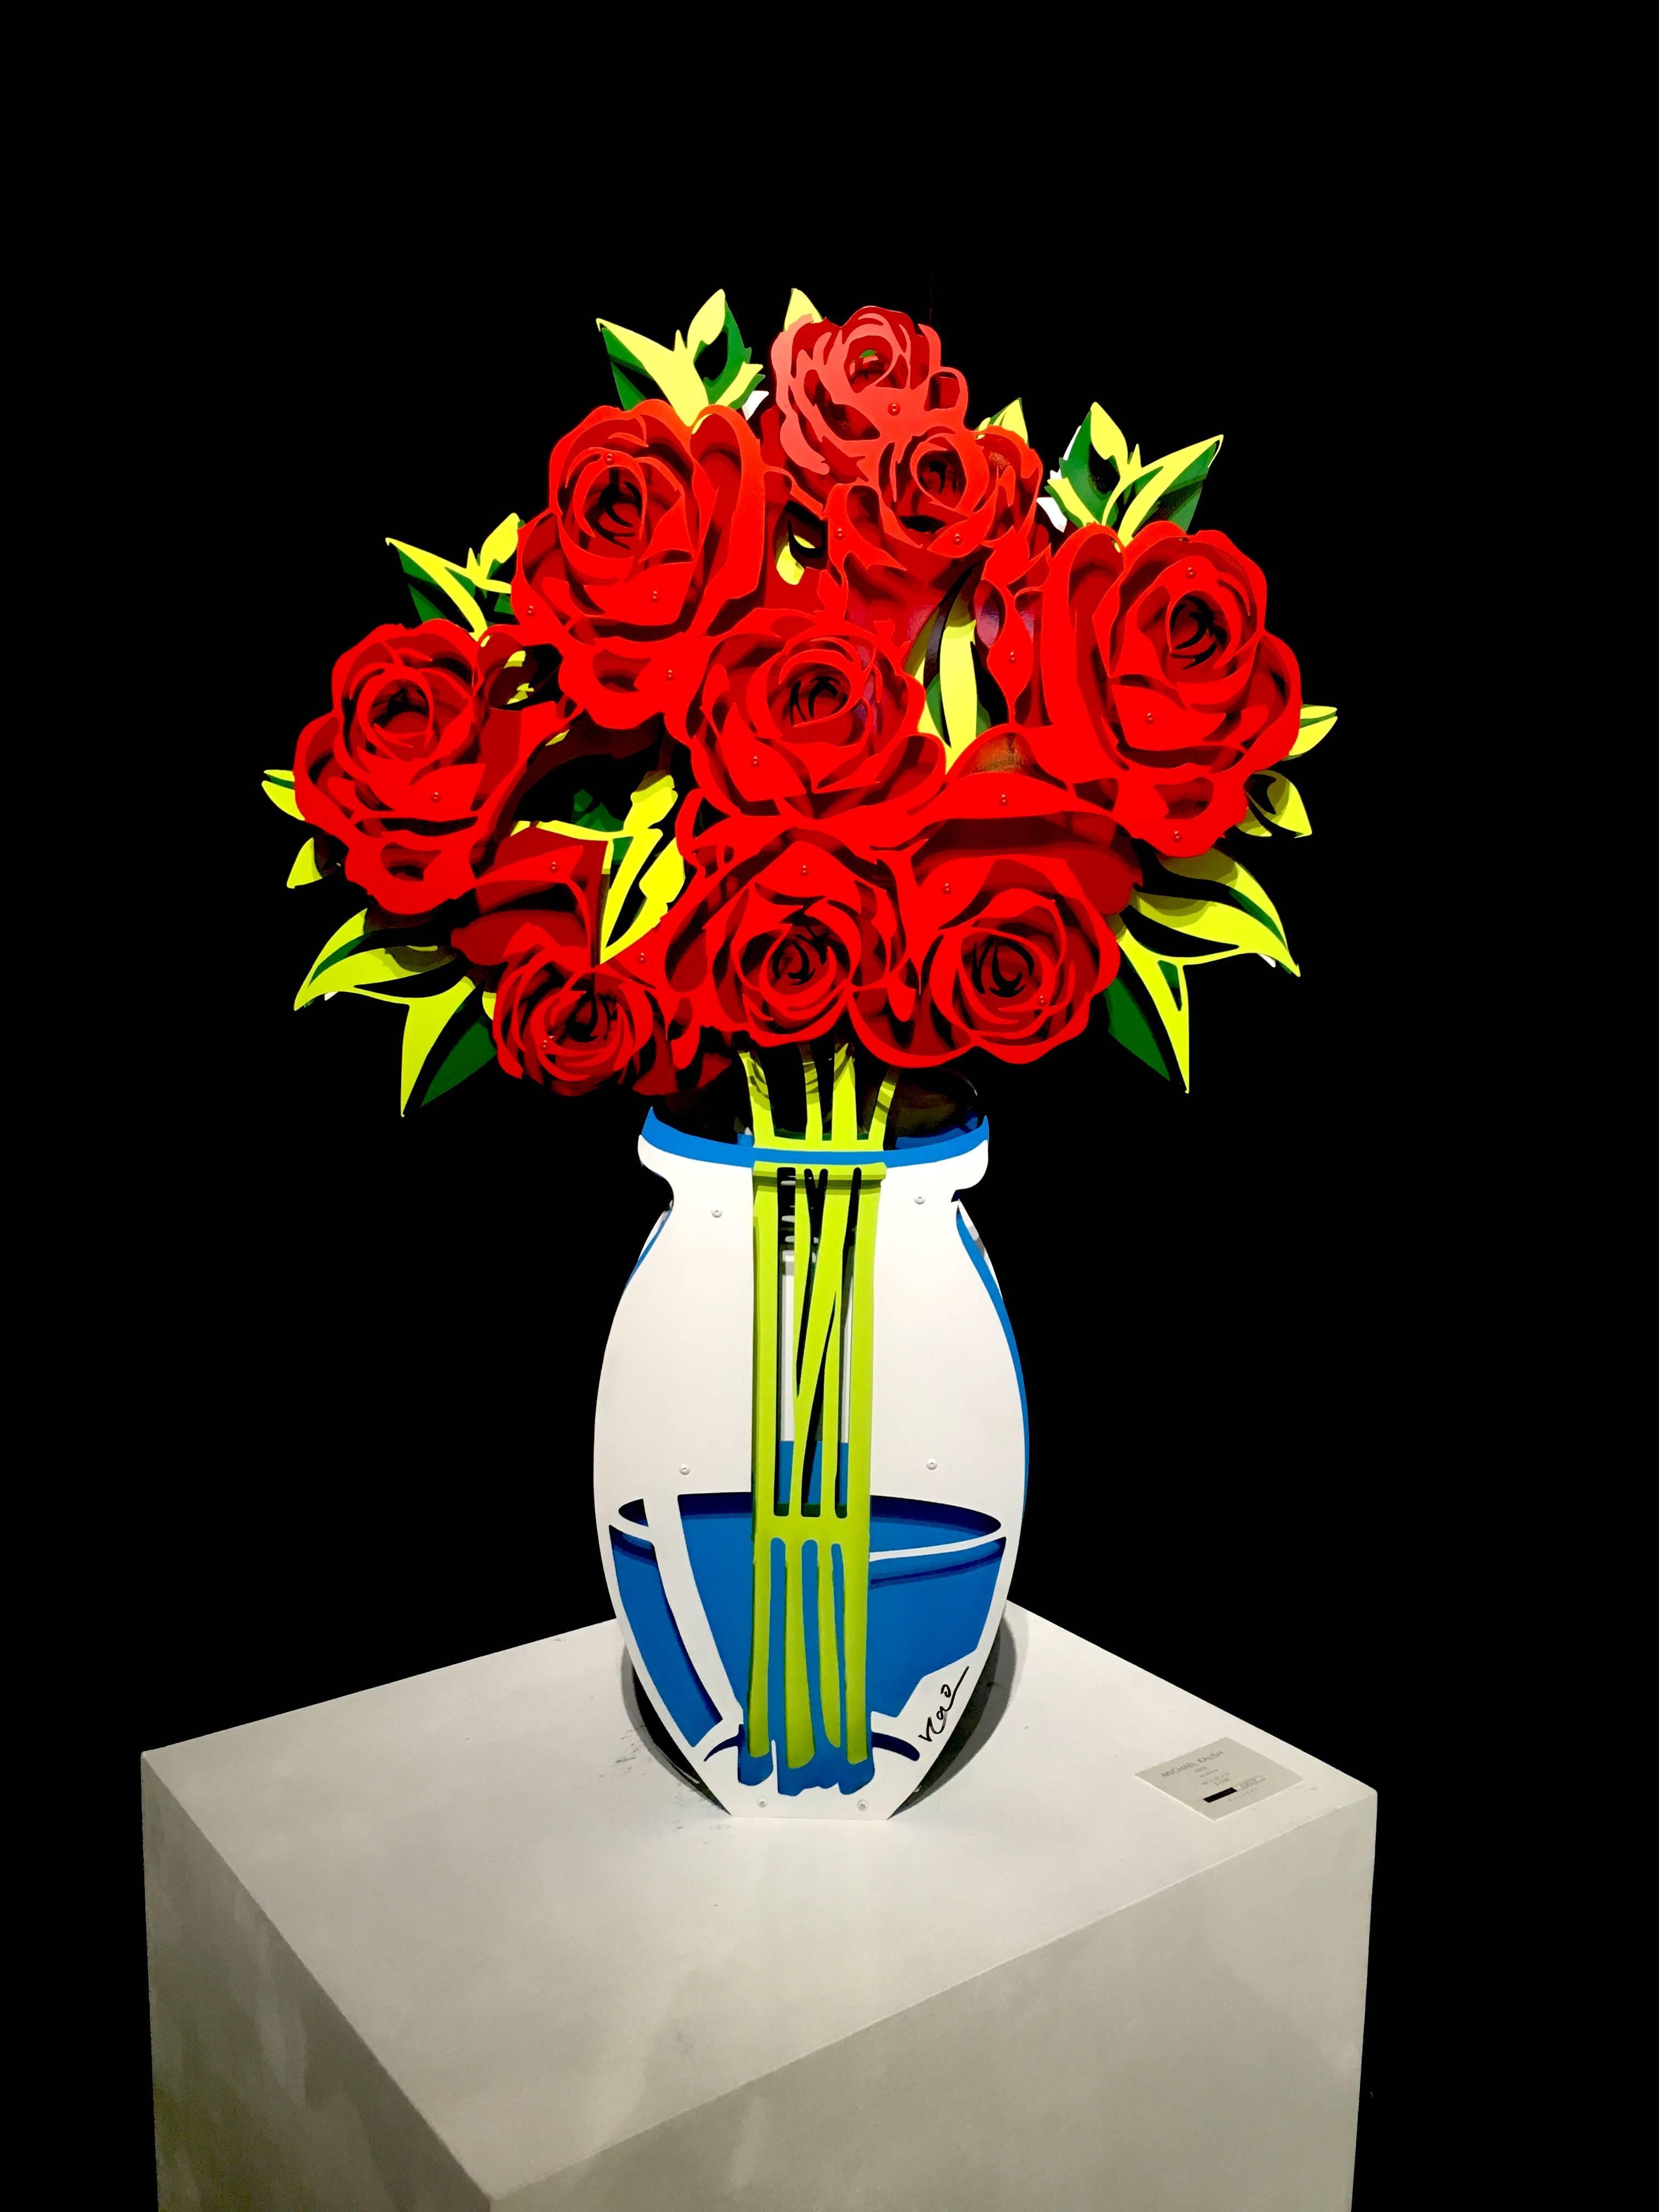 Michael Kalish
Vase
42